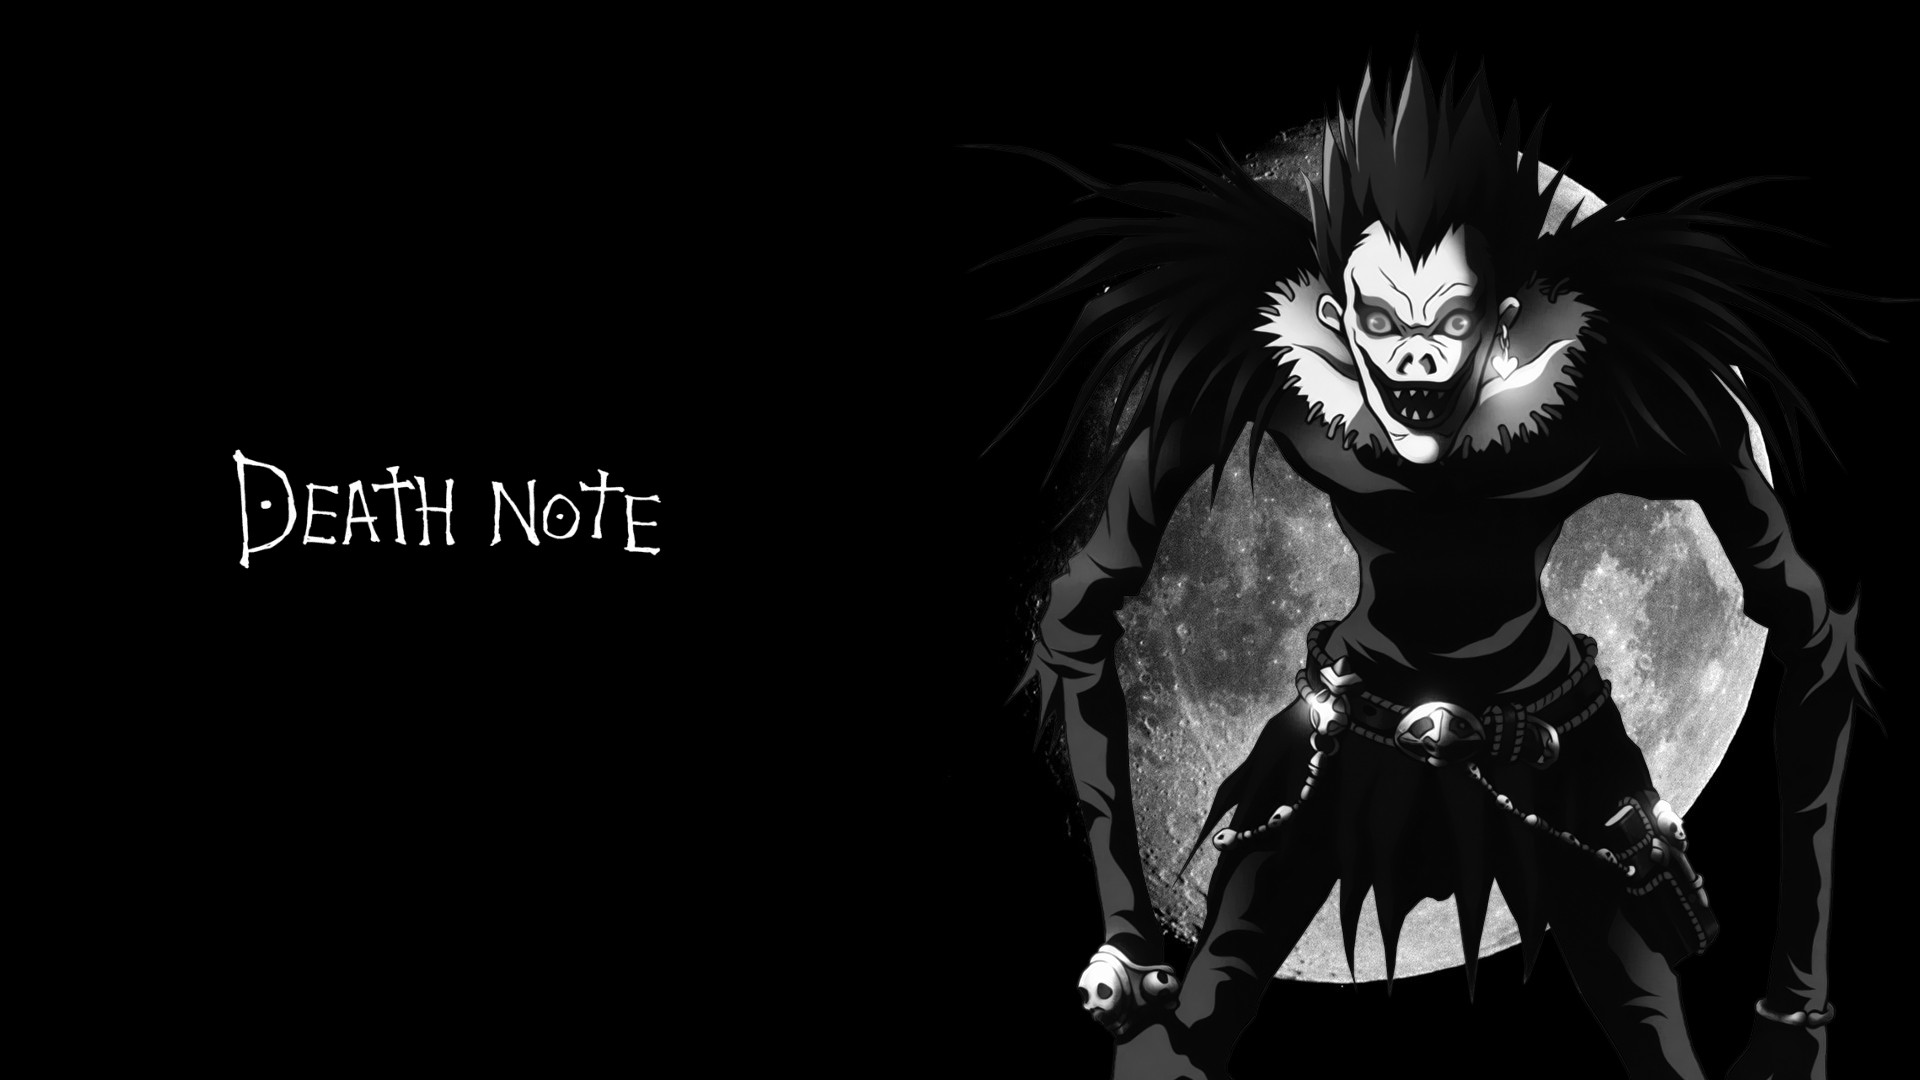 Death Note Ryuk Wallpaper Images Anime Wallpaper - Kokean.com